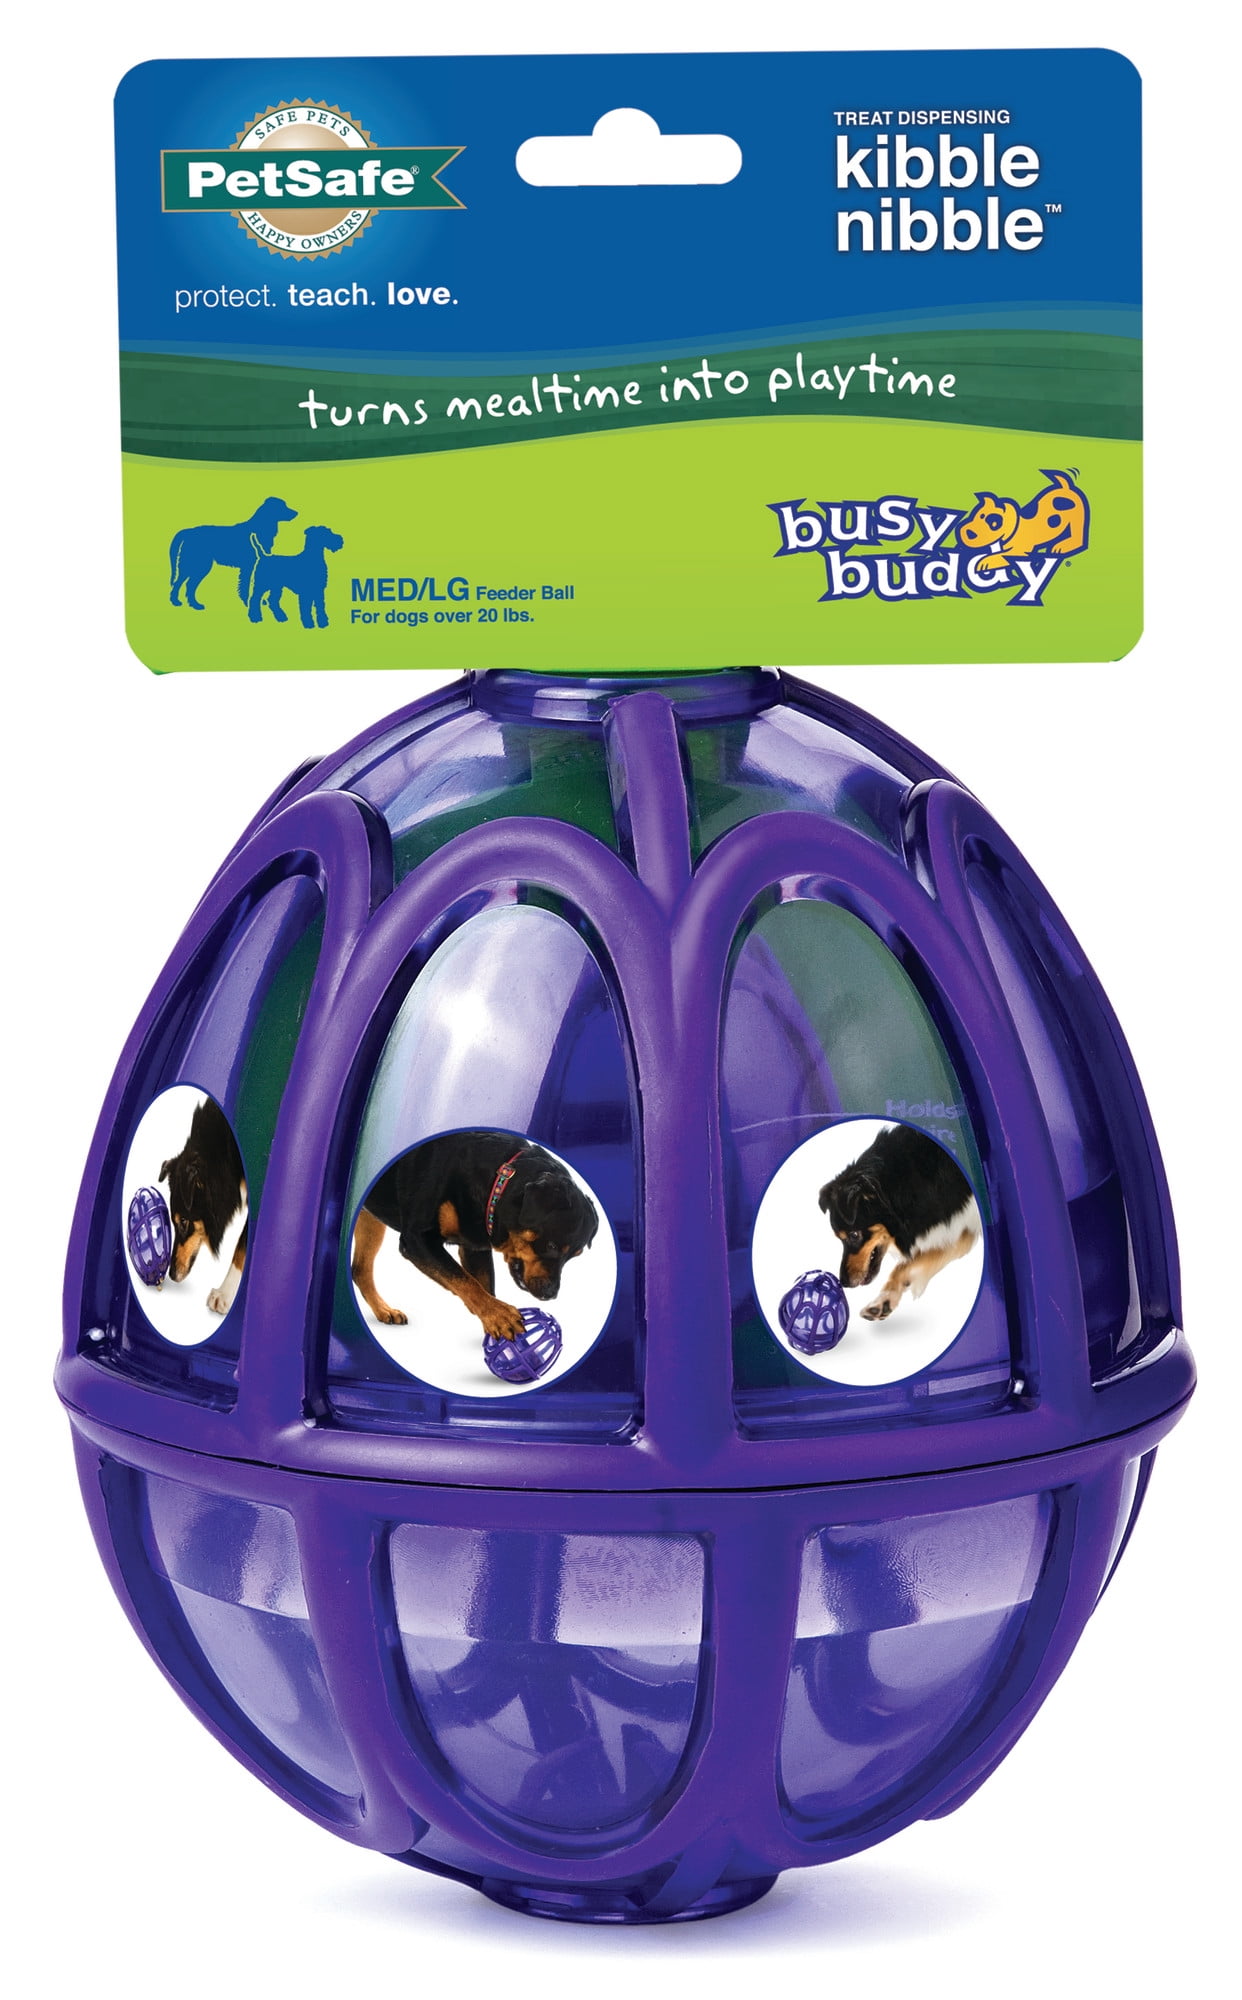 PetSafe Busy Buddy Waggle Dog Toy, Treat Dispensing Dog, Medium